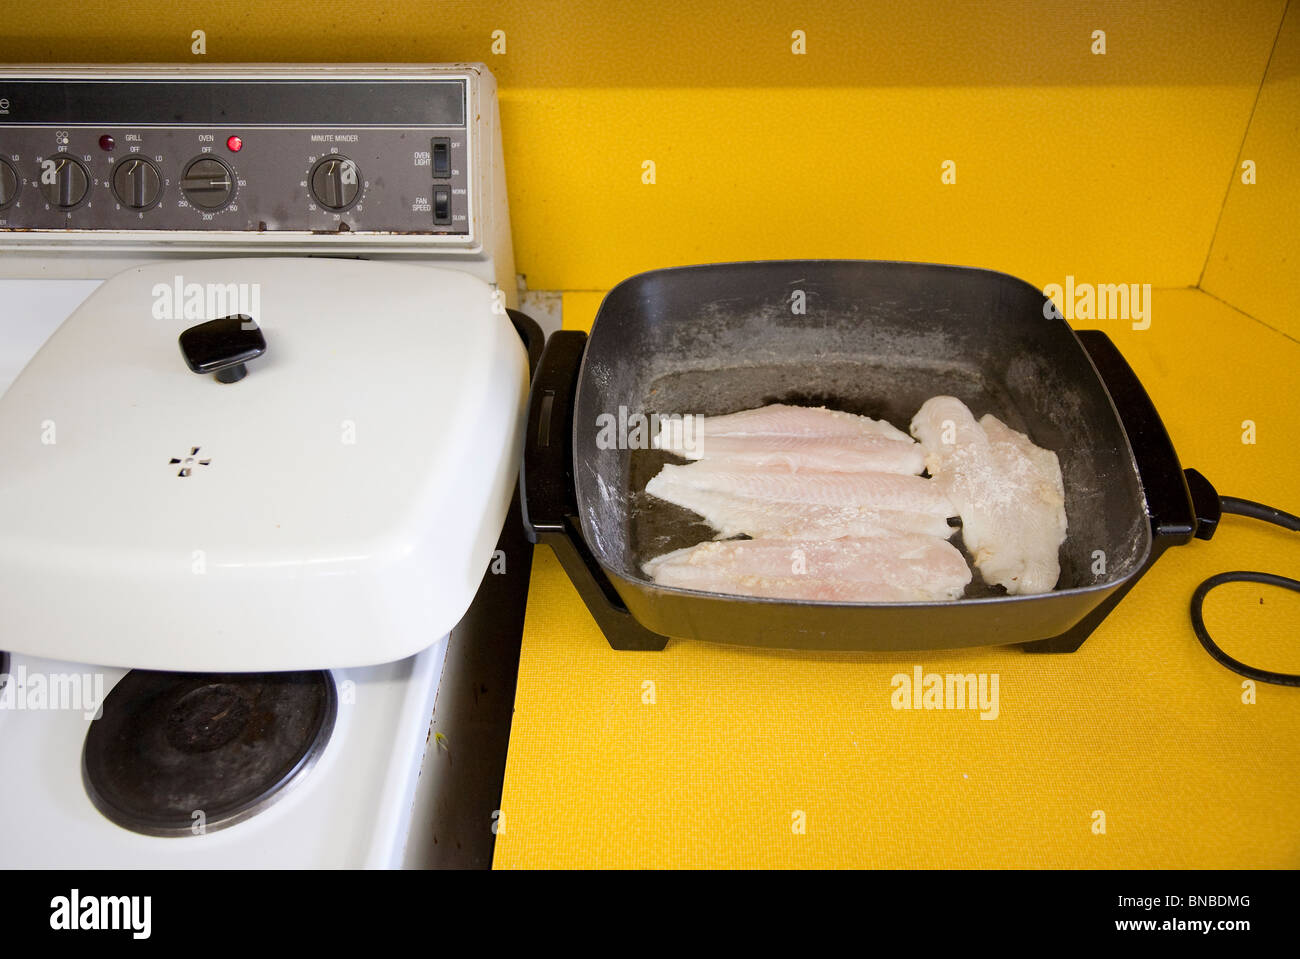 https://c8.alamy.com/comp/BNBDMG/fish-fries-in-an-electric-skillet-in-an-old-kitchen-BNBDMG.jpg